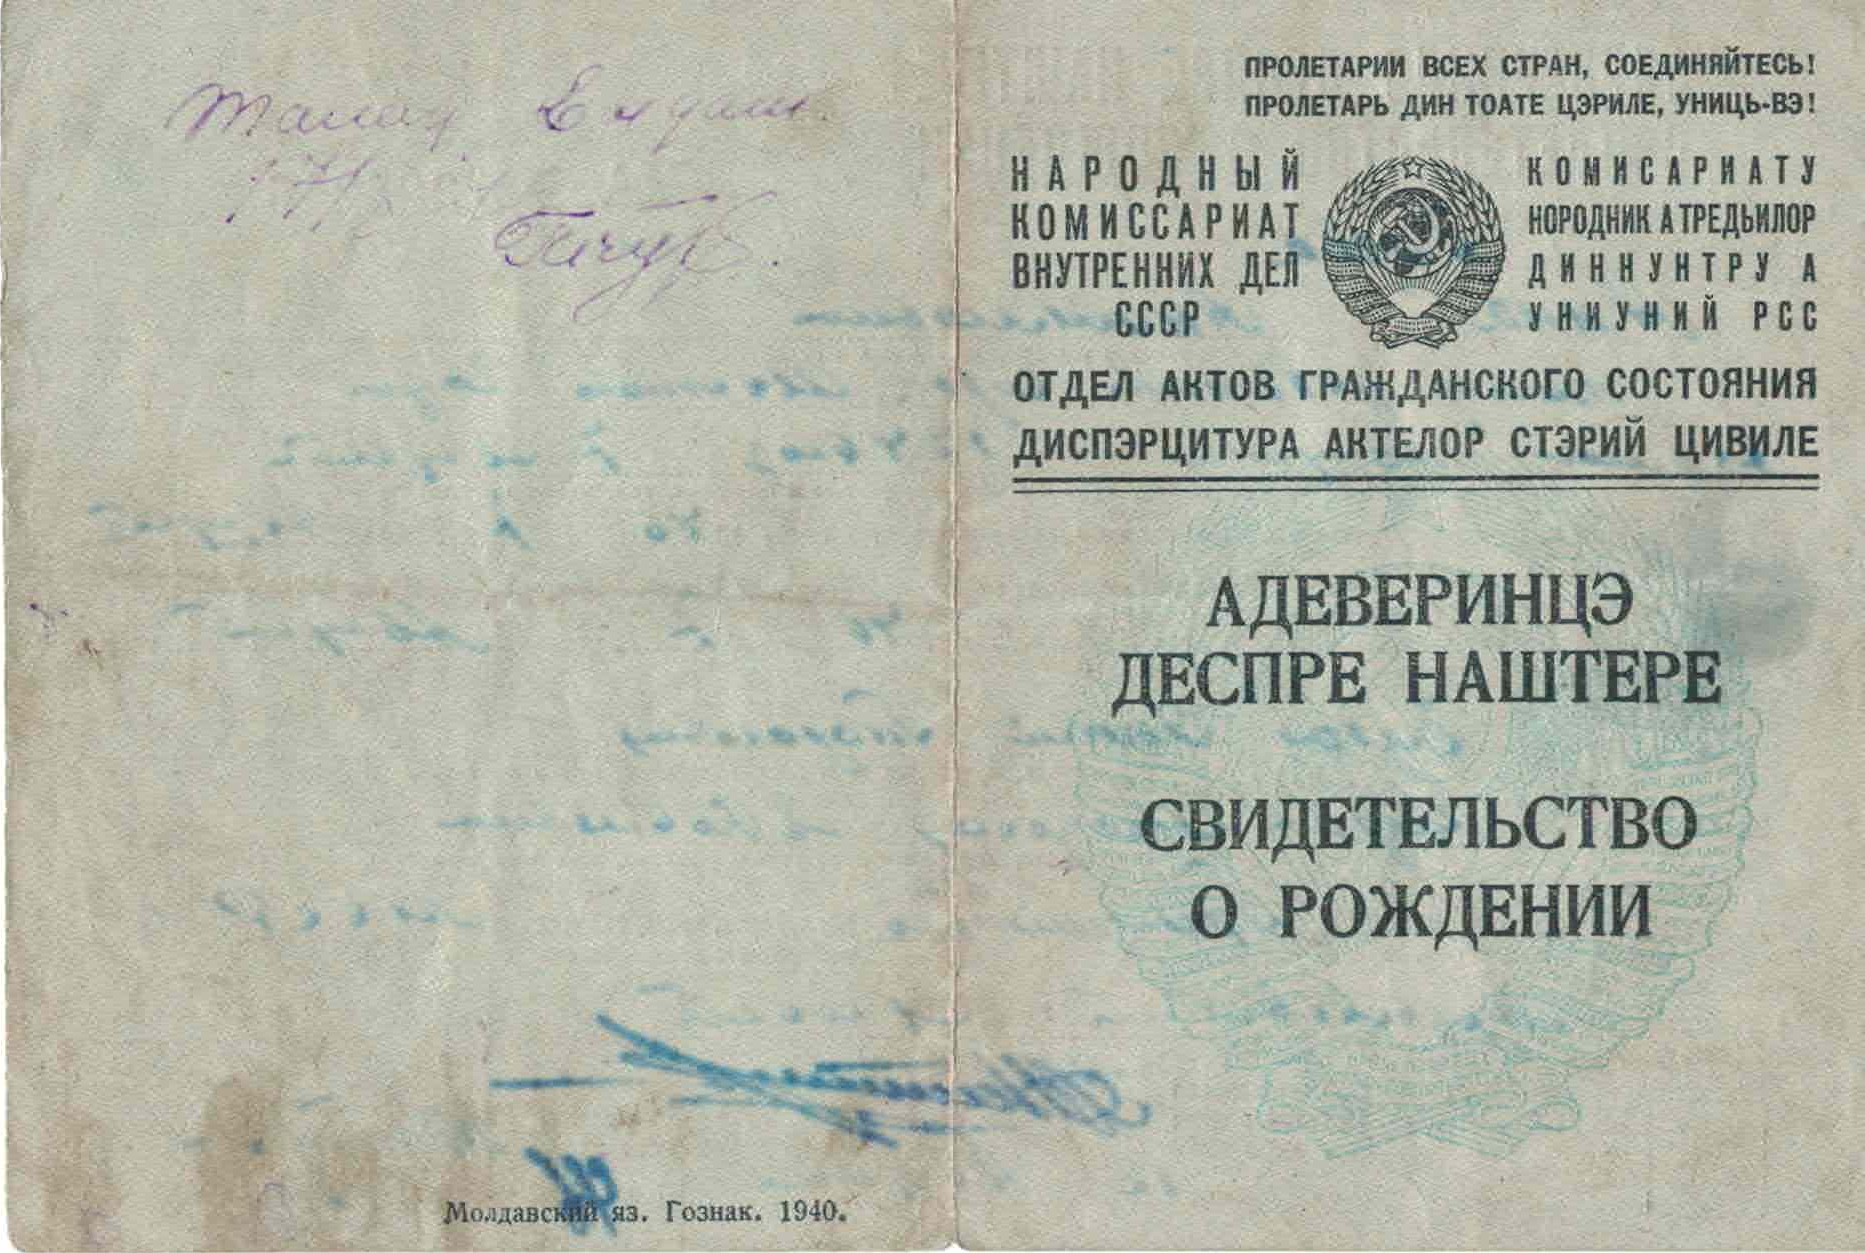 USSR birth certificate